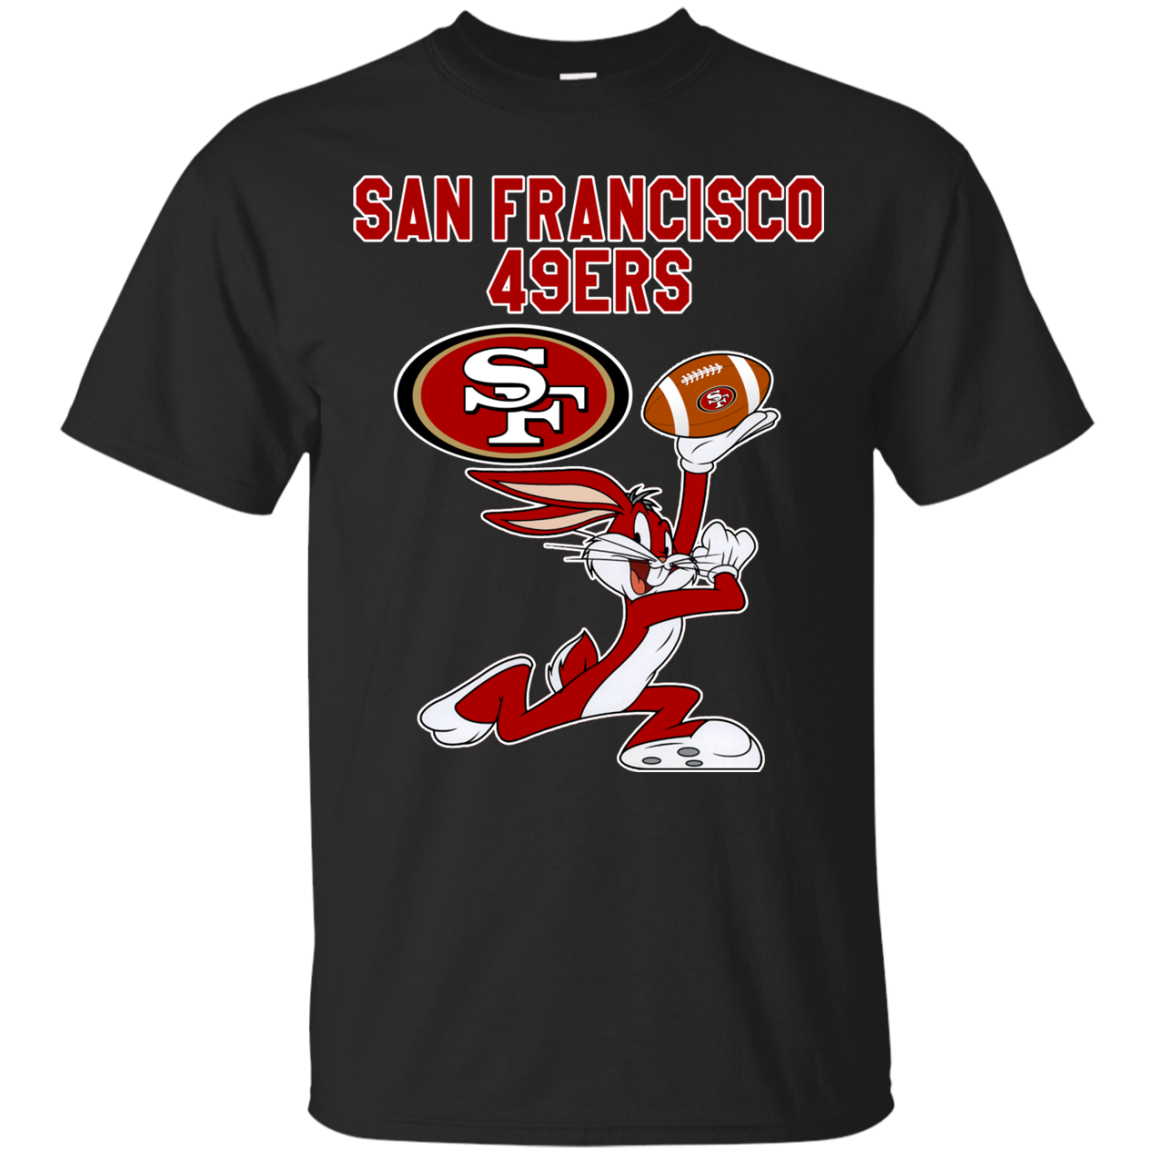 San Francisco 49ers Bugs Bunny Shirts - Teesmiley